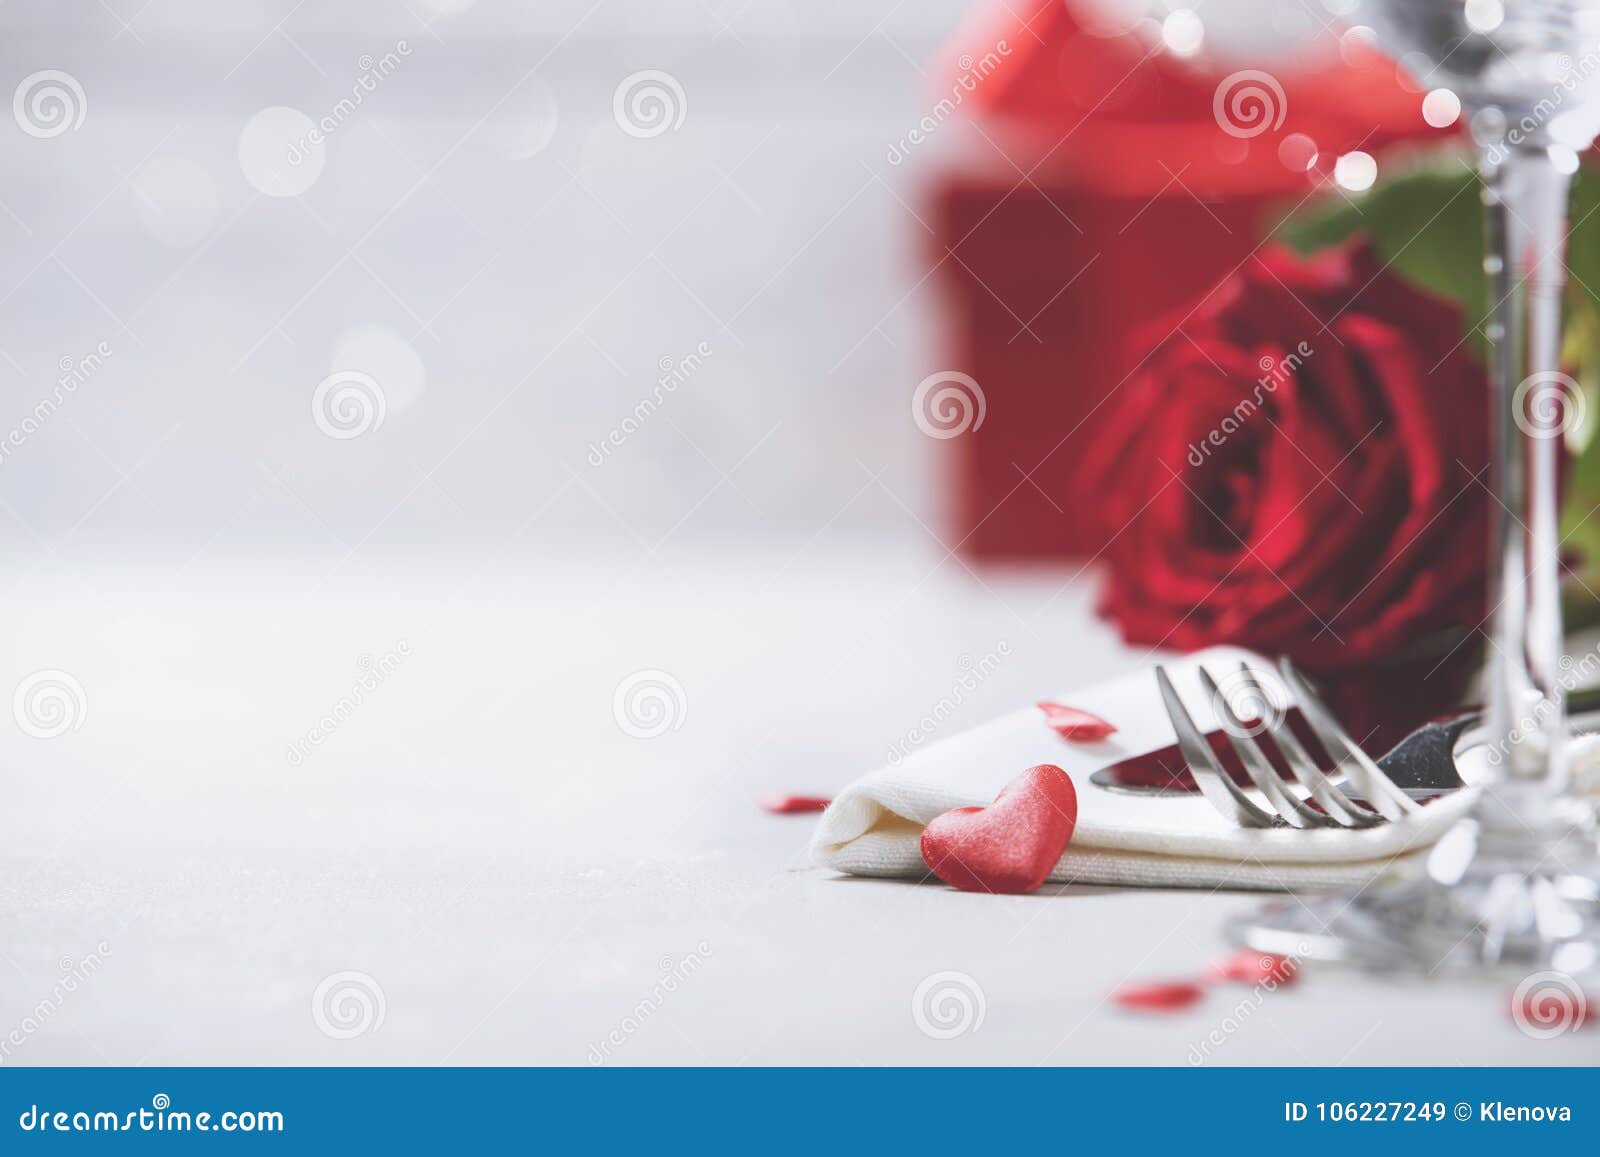 valentine`s day or romantic dinner concept